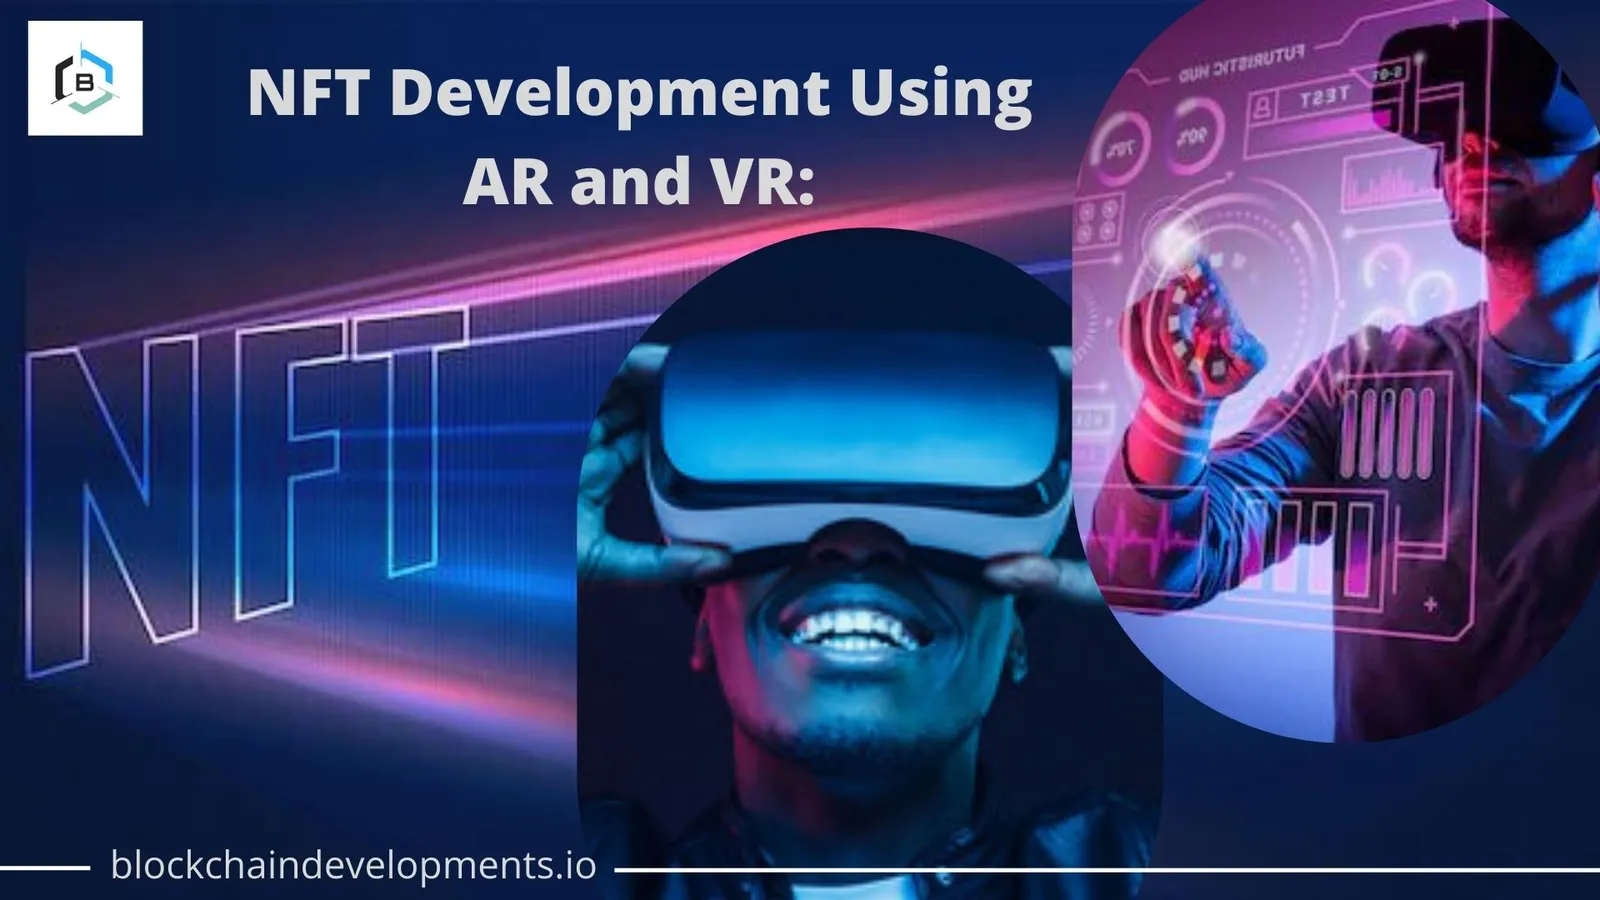 NFT Development Using AR and VR: